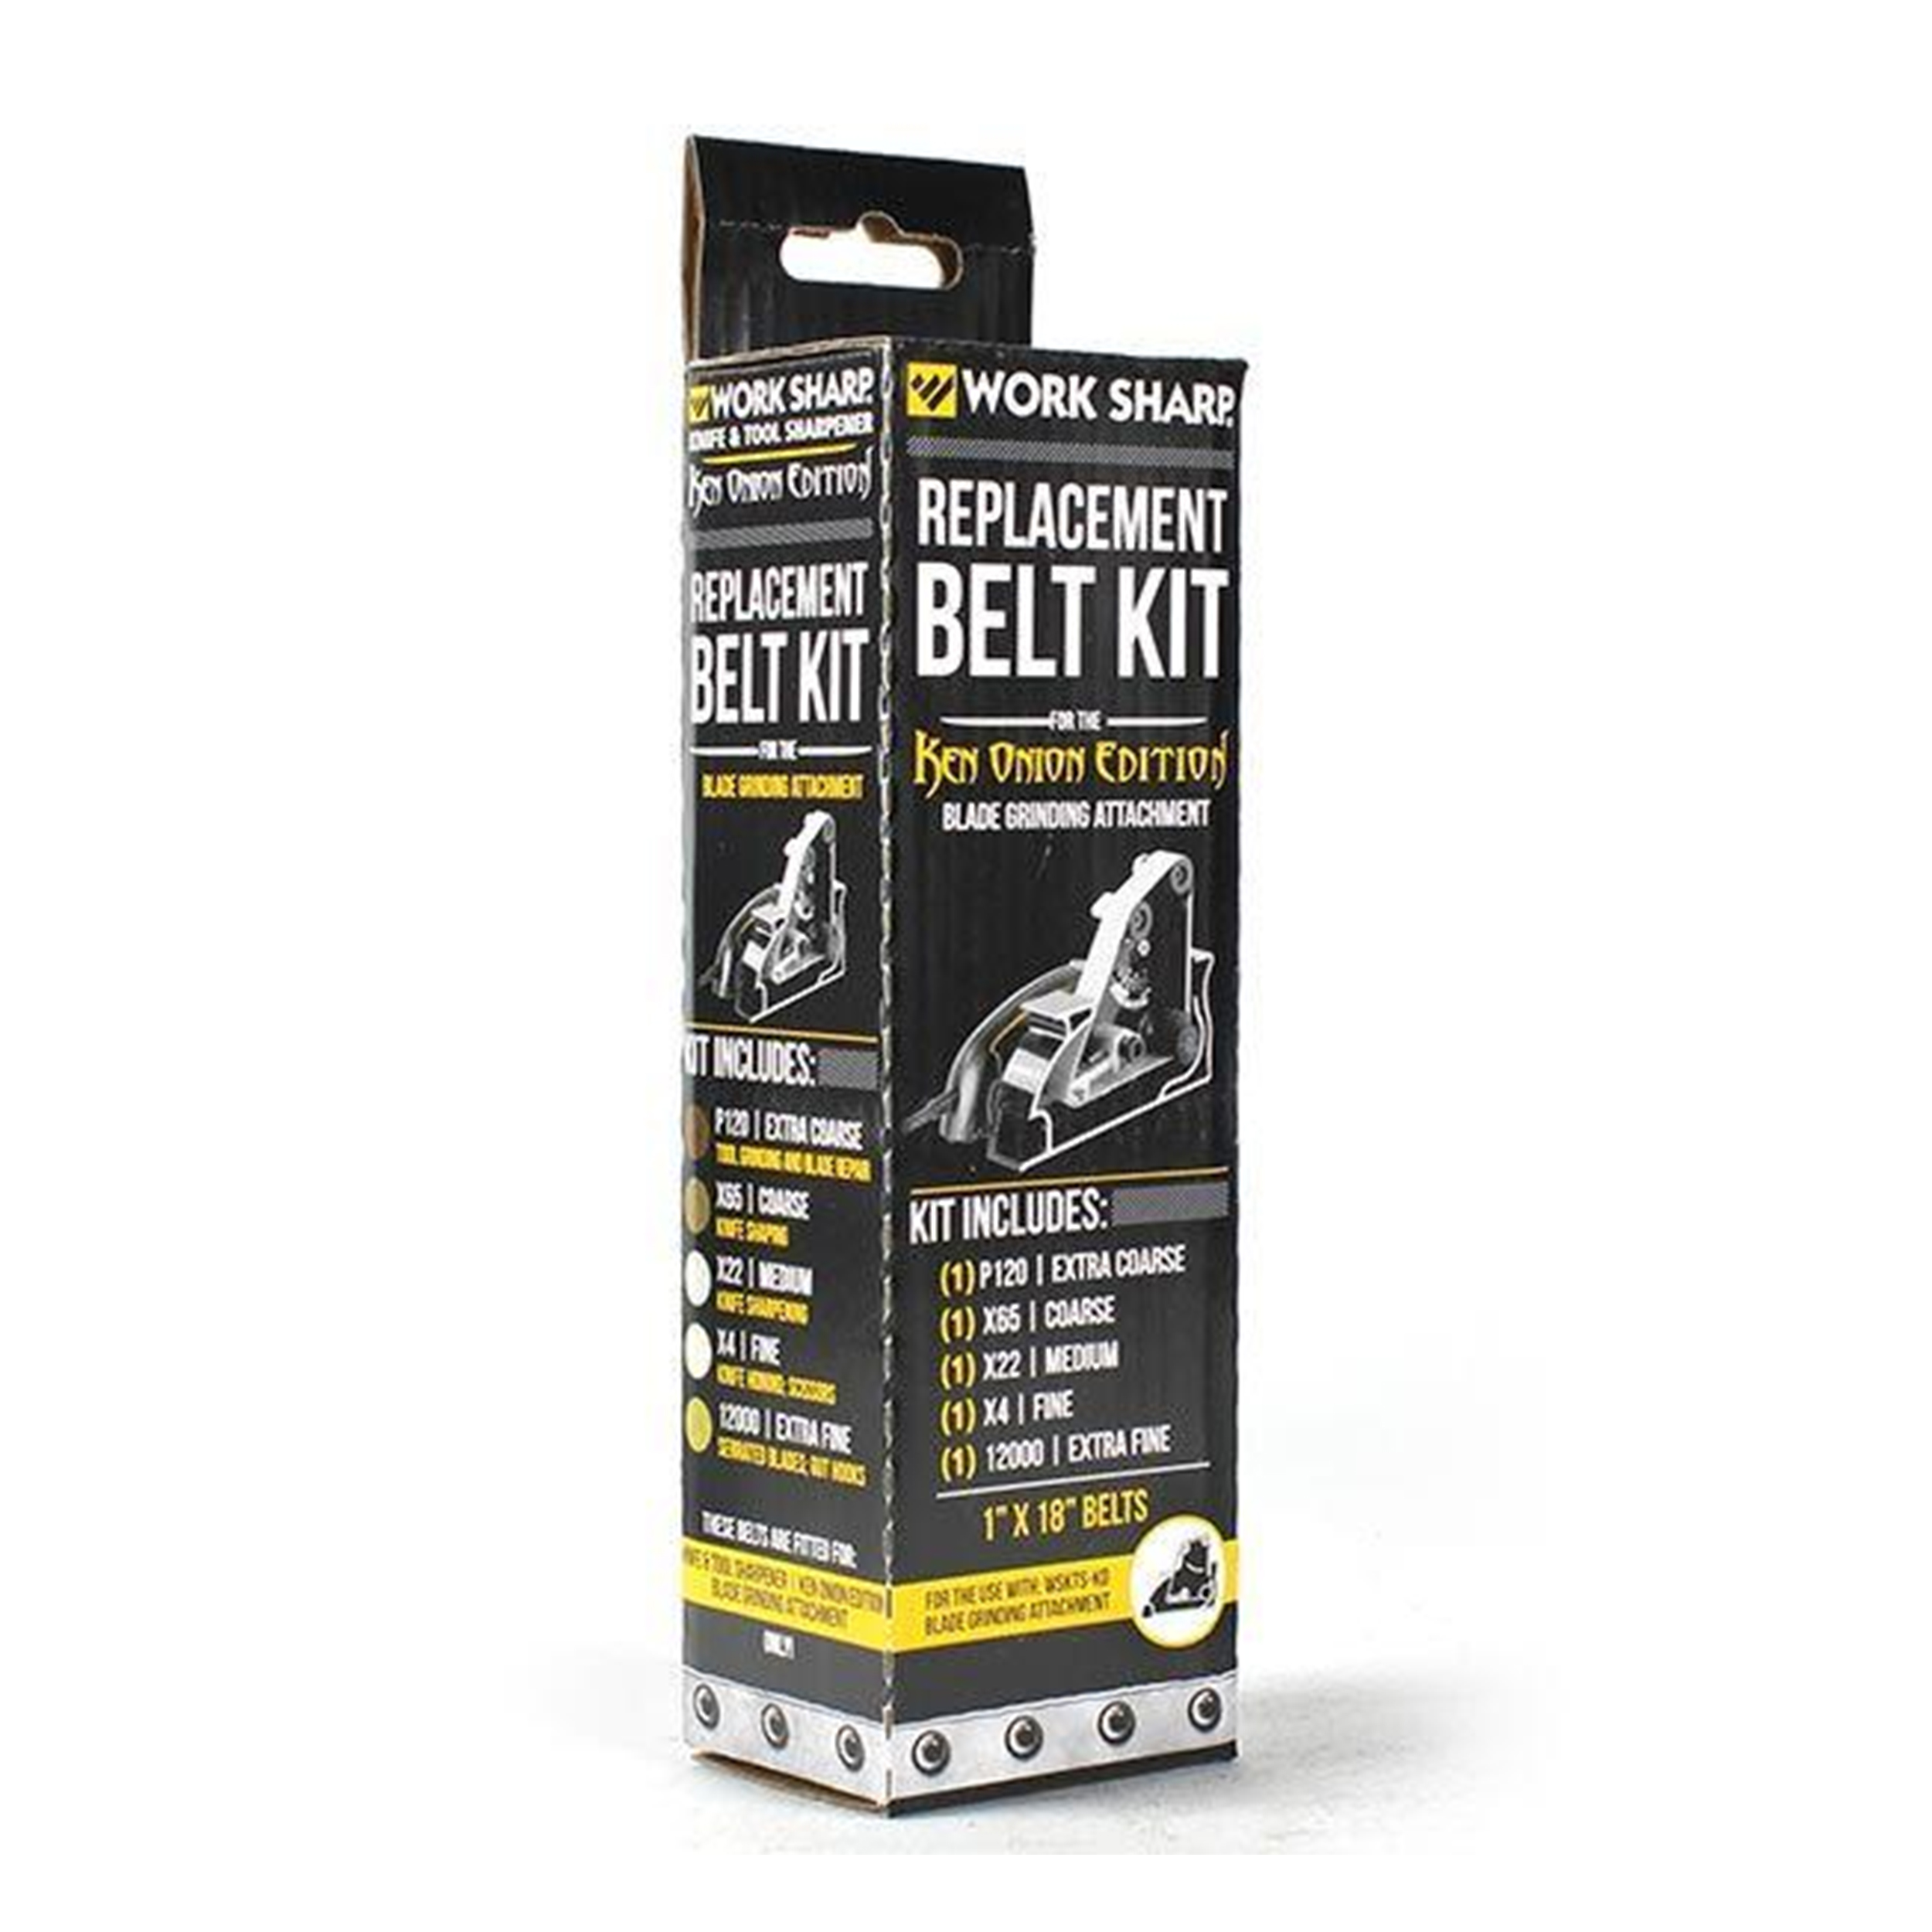 Knife & Tool Sharpener Ken Onion Edition Belt Kit